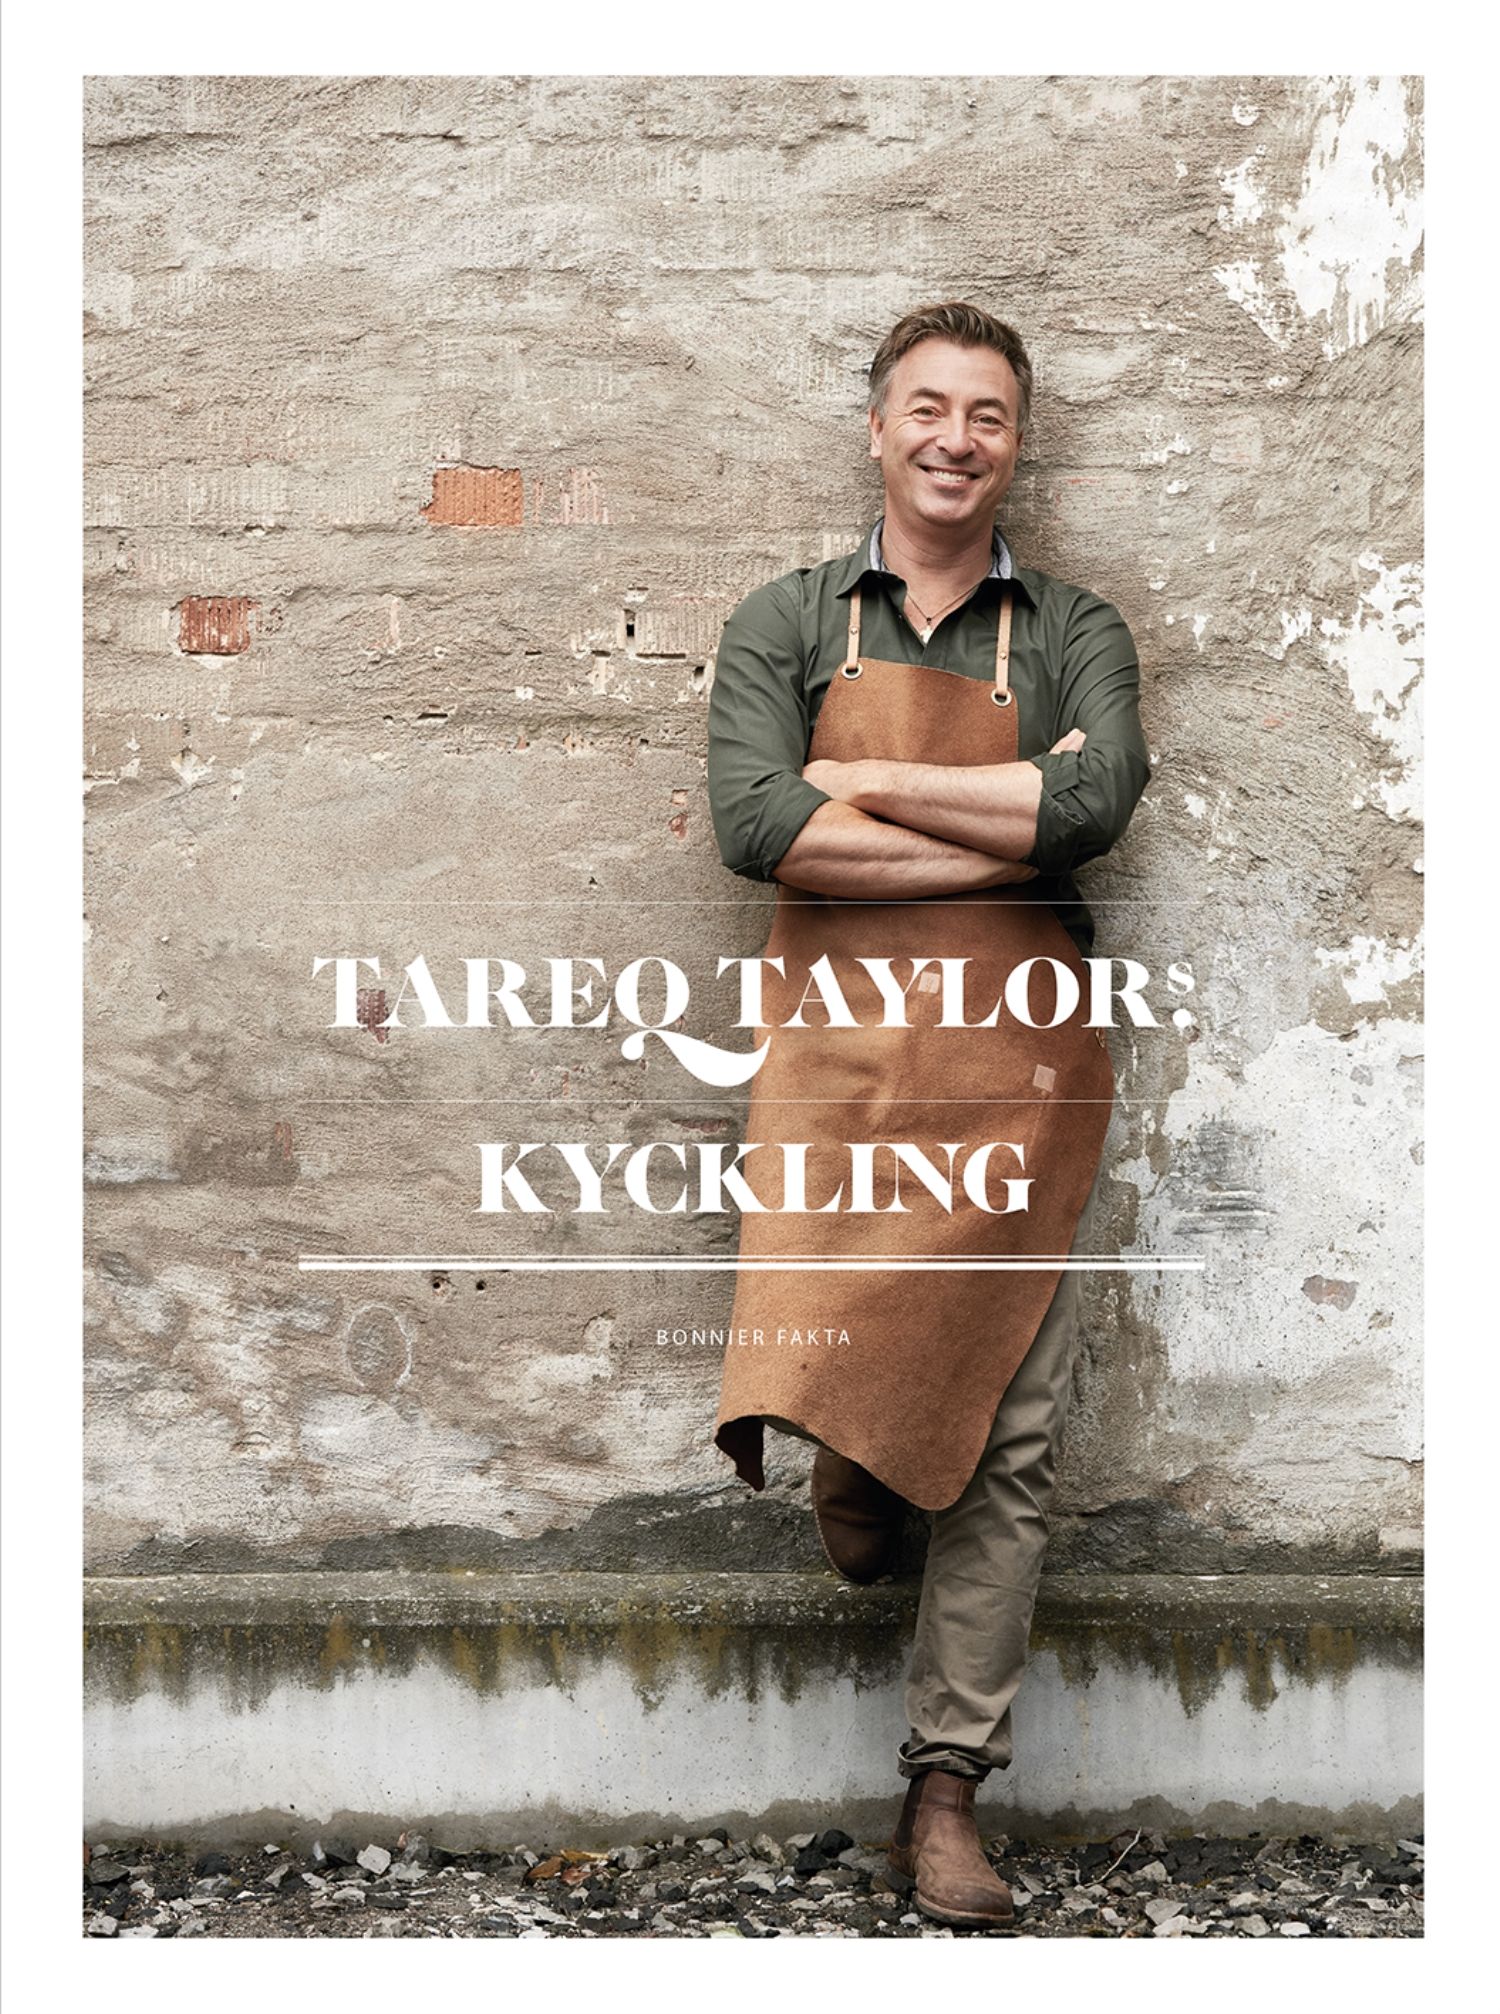 Tareq Taylors kyckling, e-bog af Tareq Taylor